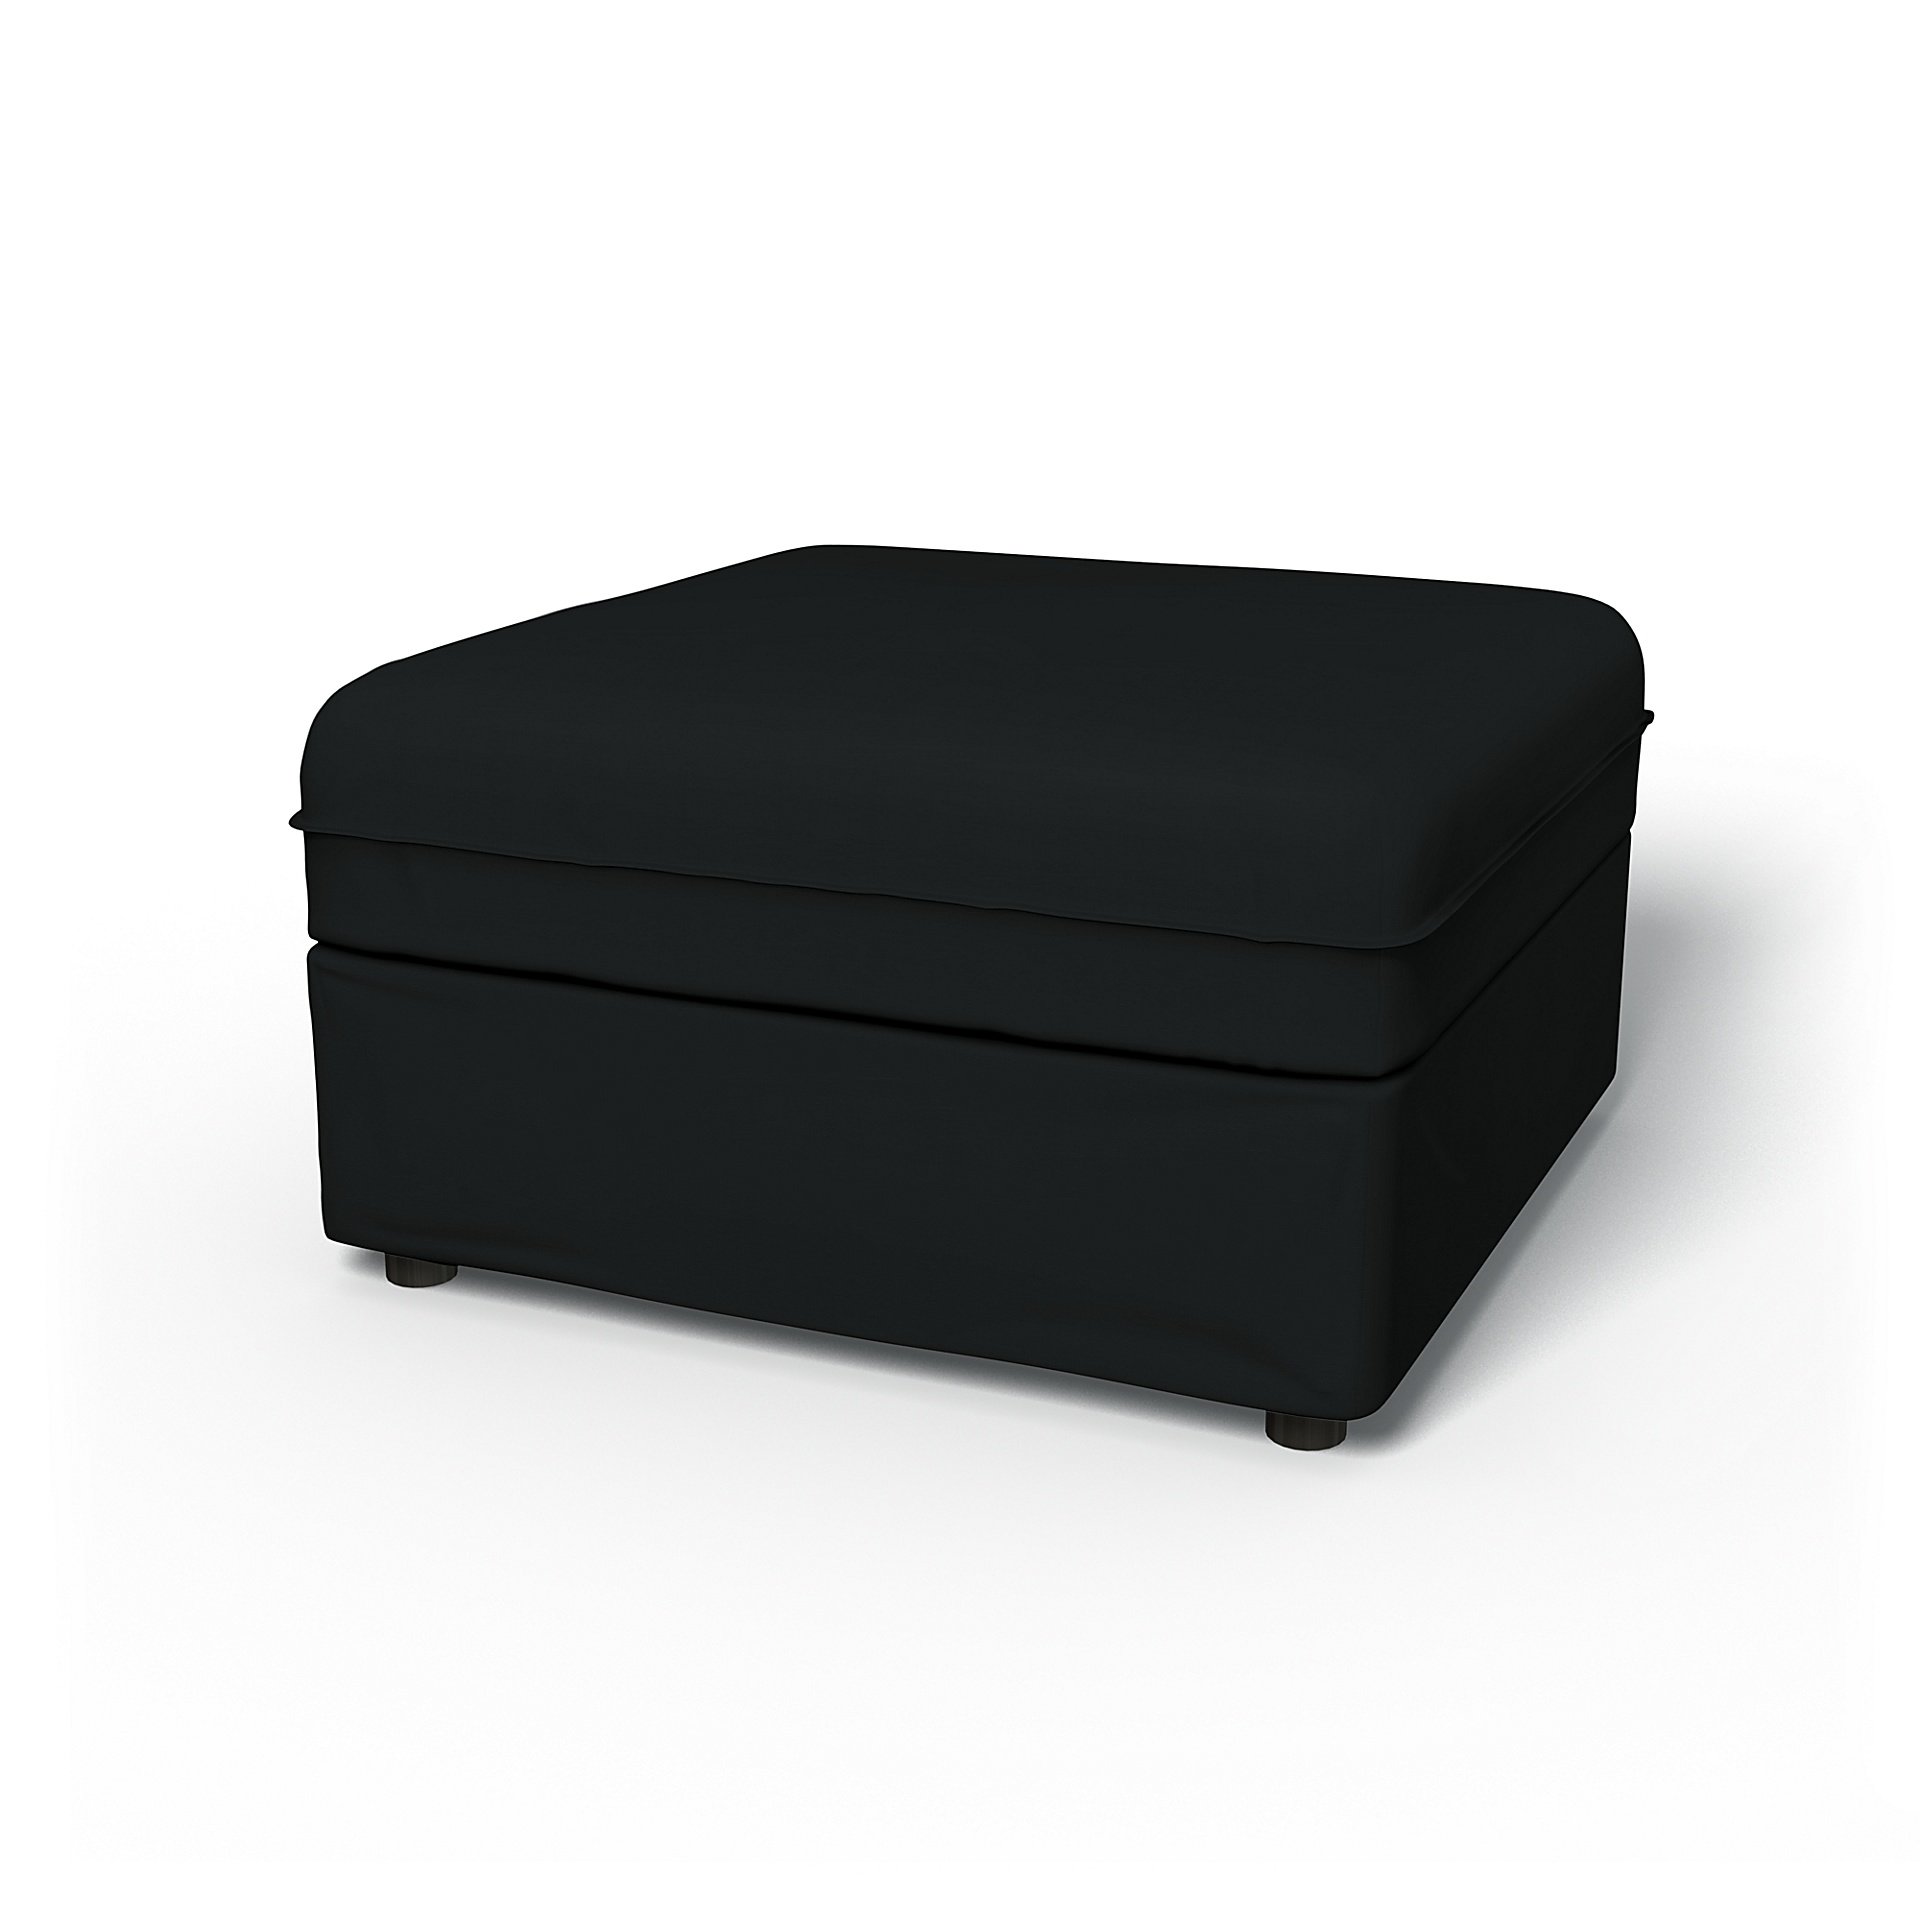 IKEA - Vallentuna Seat Module with Storage Cover 80x80cm 32x32in, Jet Black, Cotton - Bemz